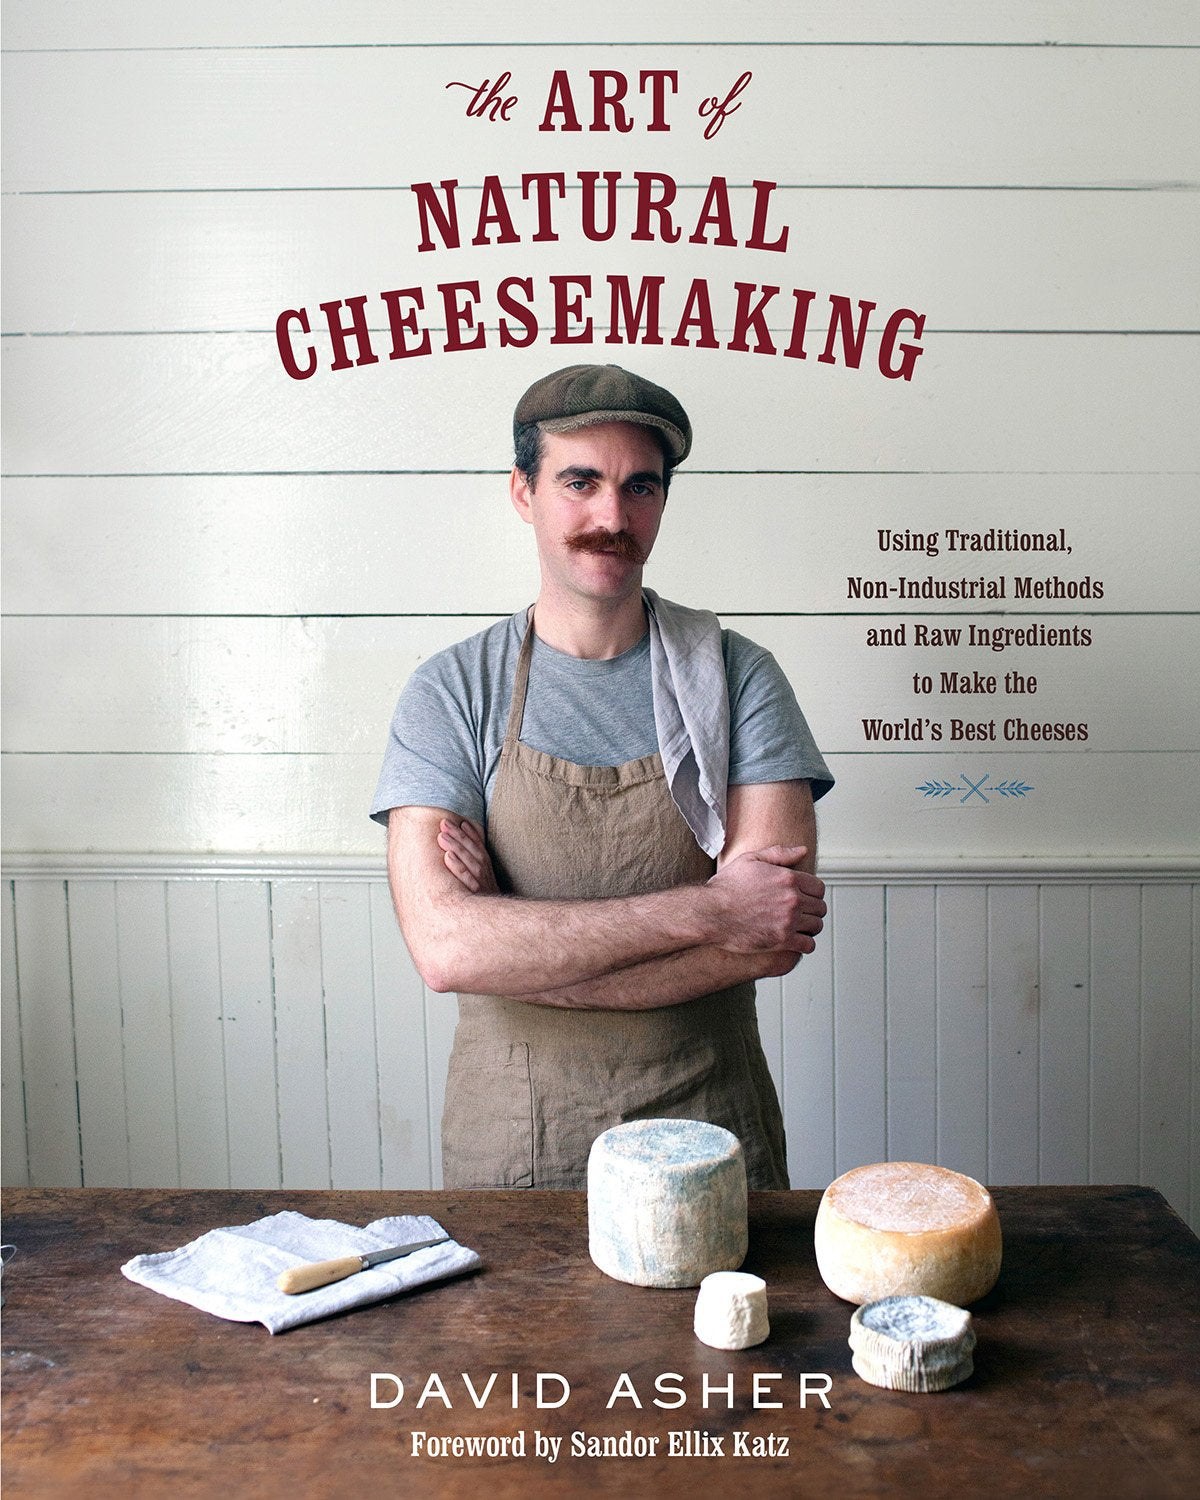 The Art of Natural Cheesemaking (David Asher)